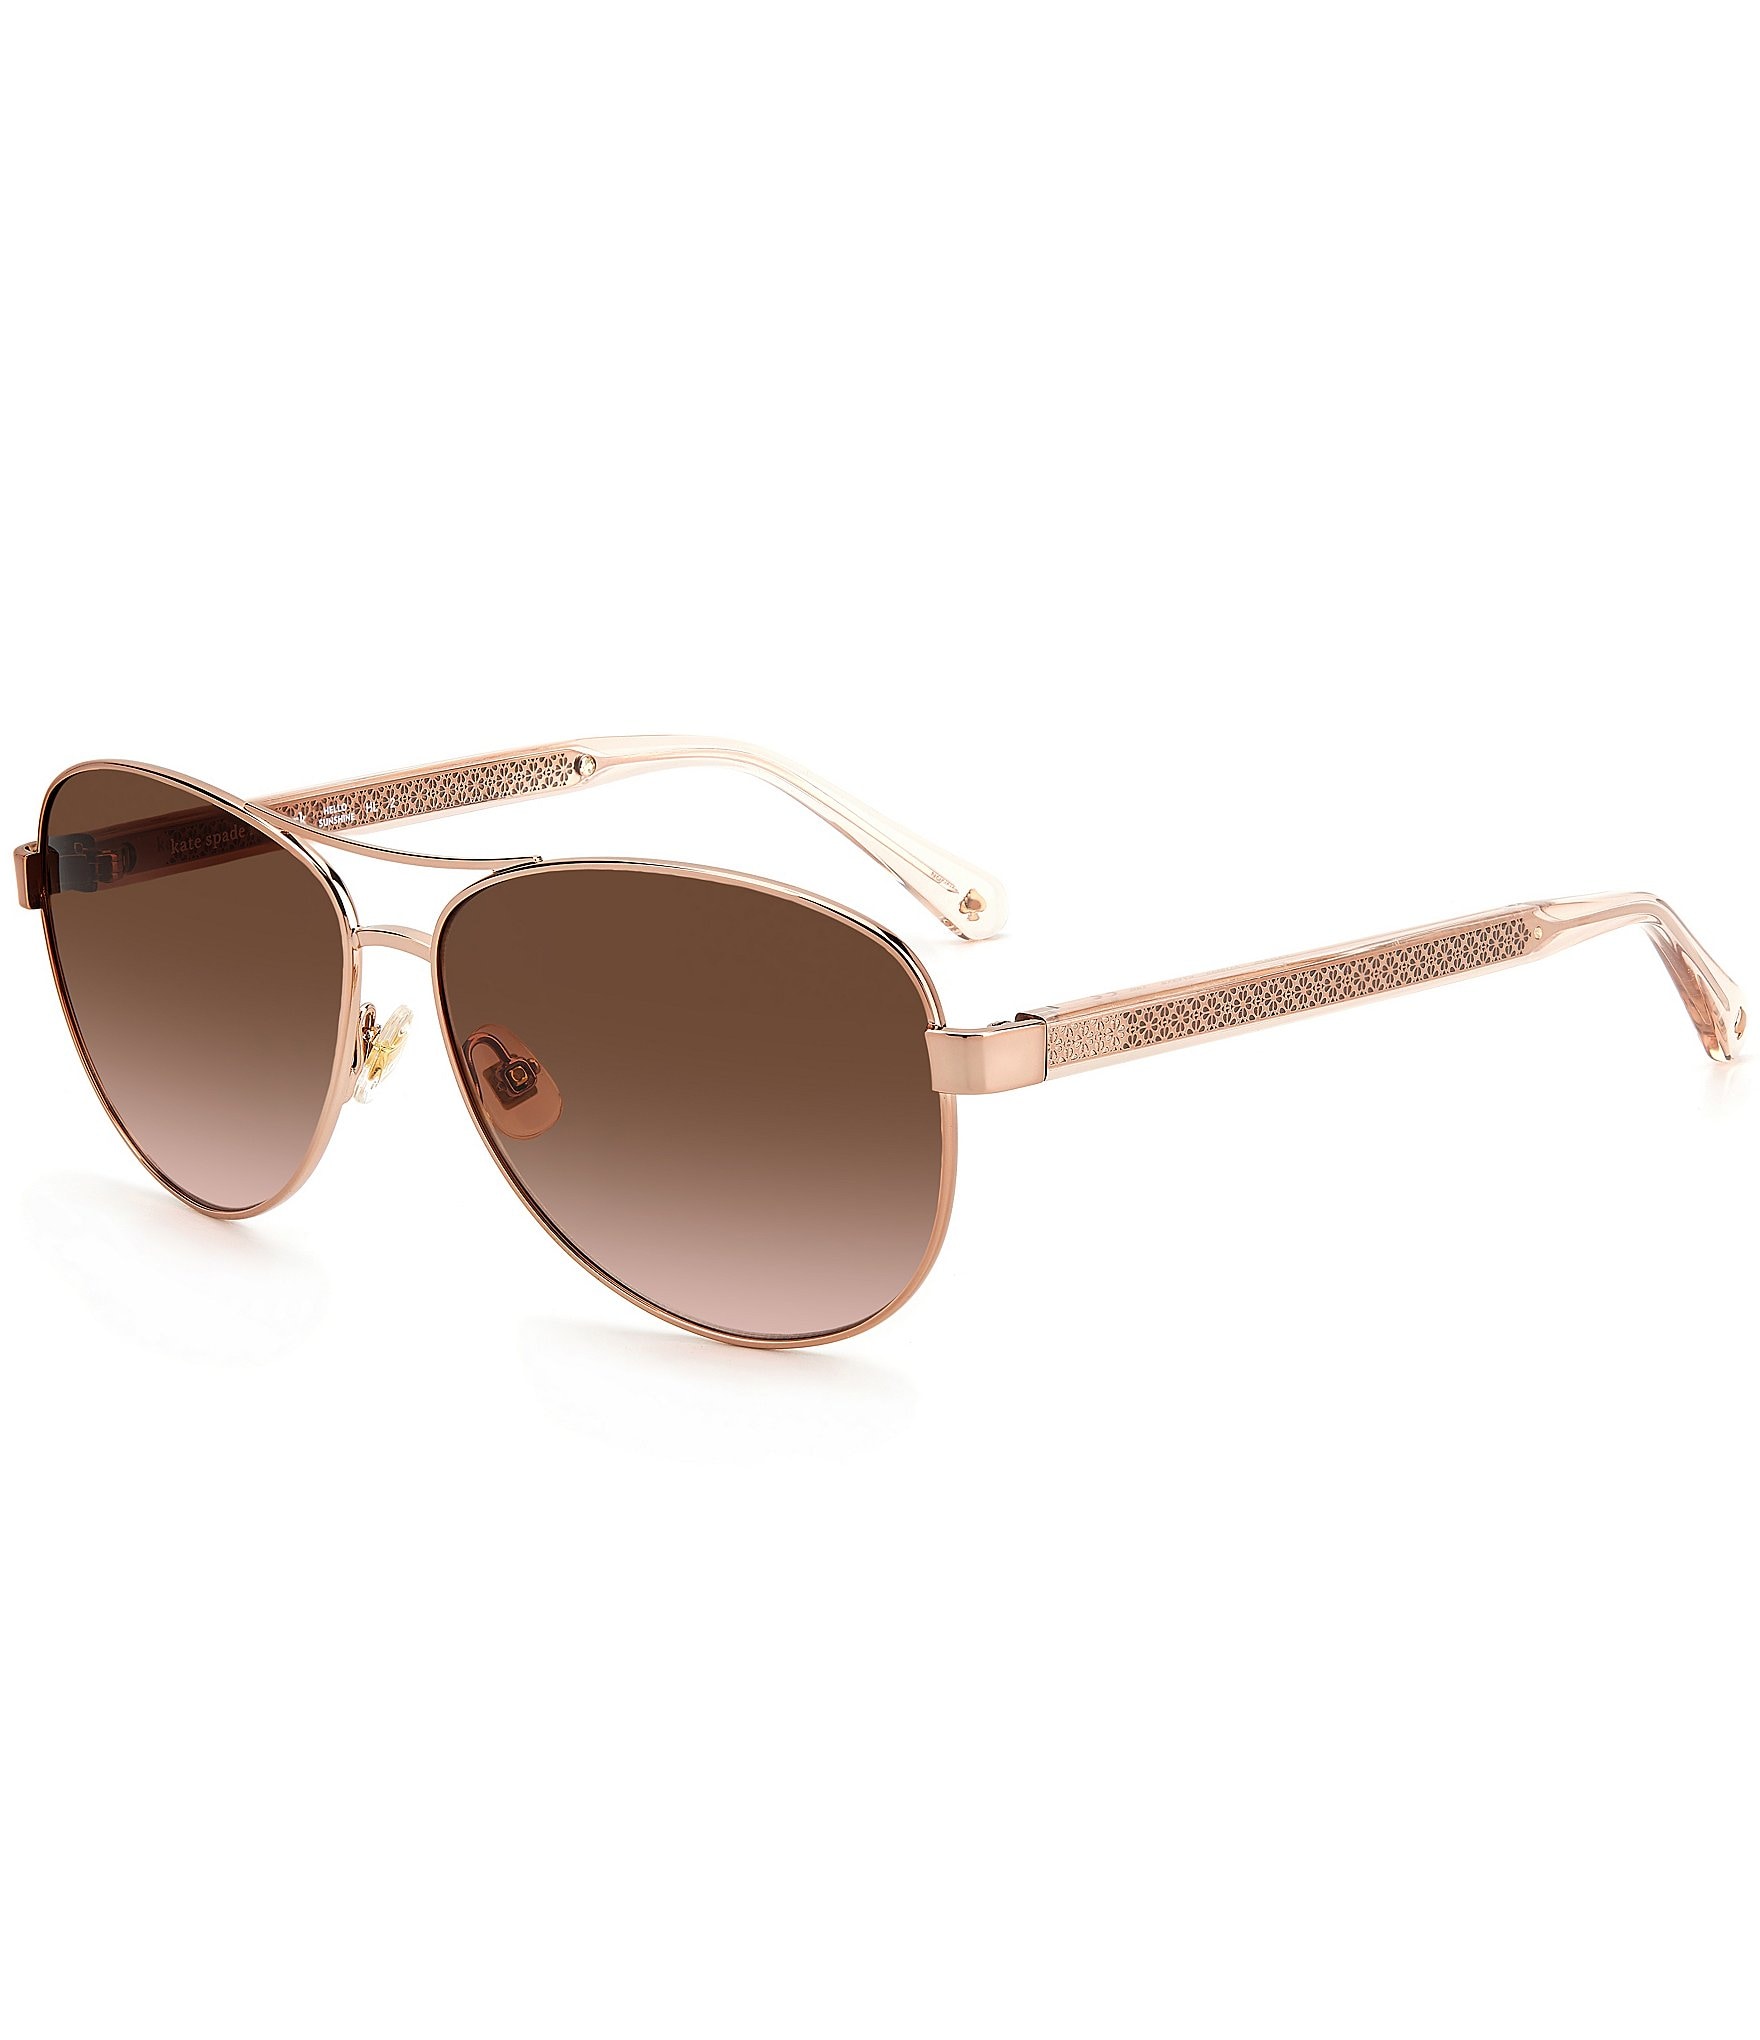 kate spade new york Pink Women's Sunglasses | Dillard's